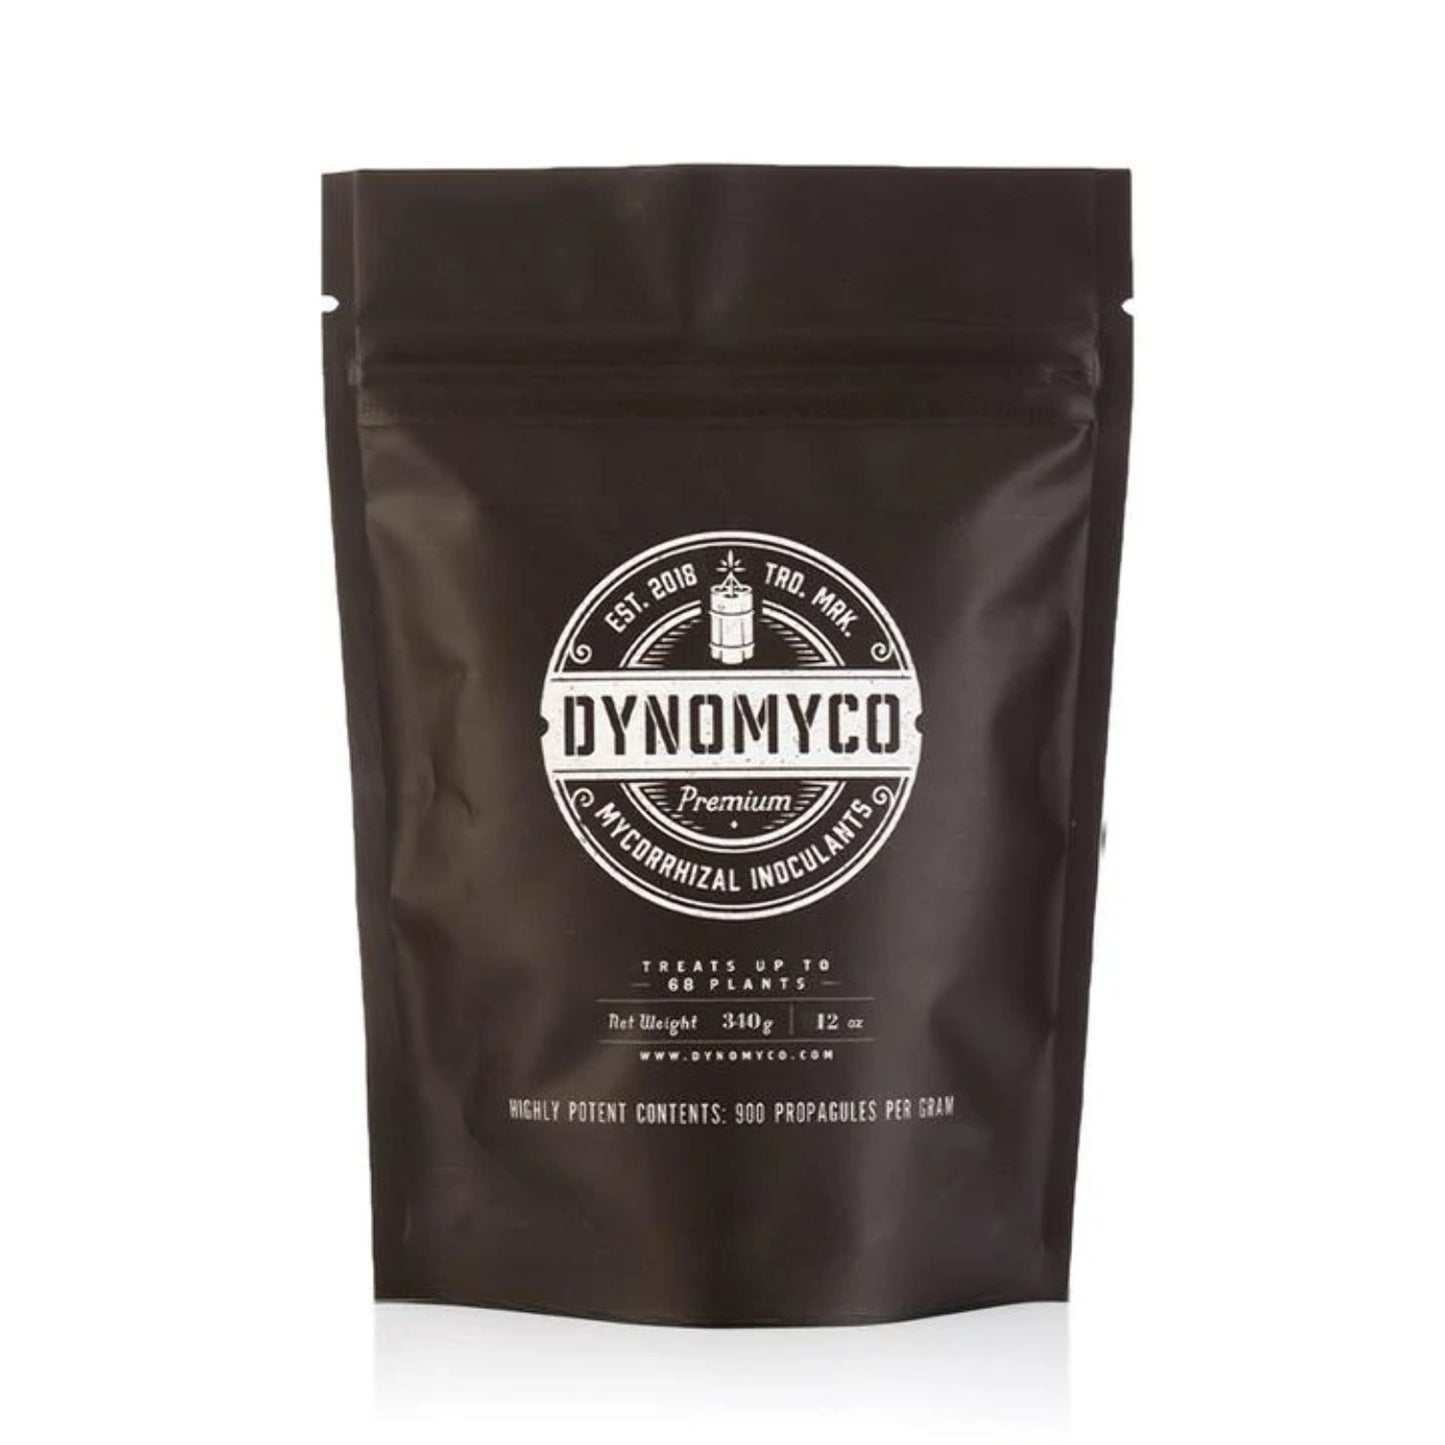 Dynomyco Premium Mycorrhizal Inoculant